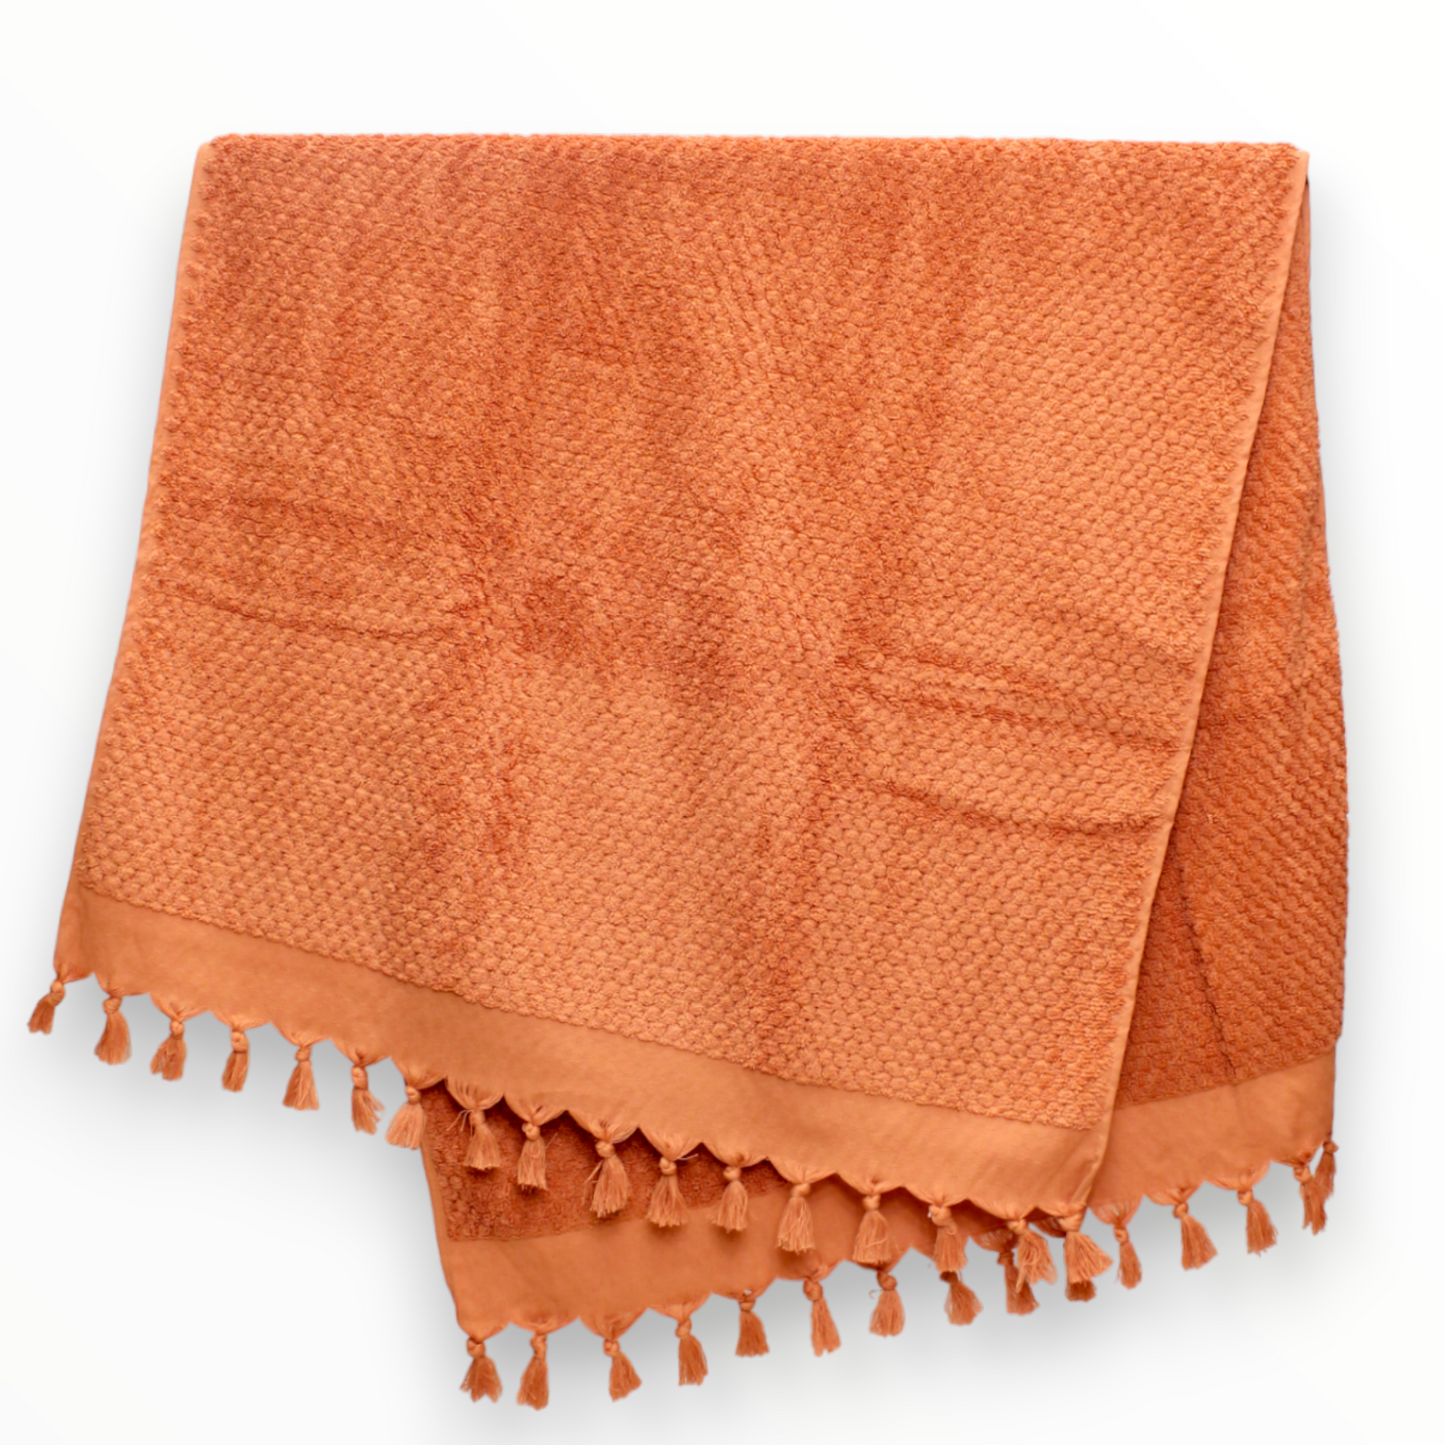 Elegant Natural Cotton Hand-Woven Turkish Terry Hammam Towel